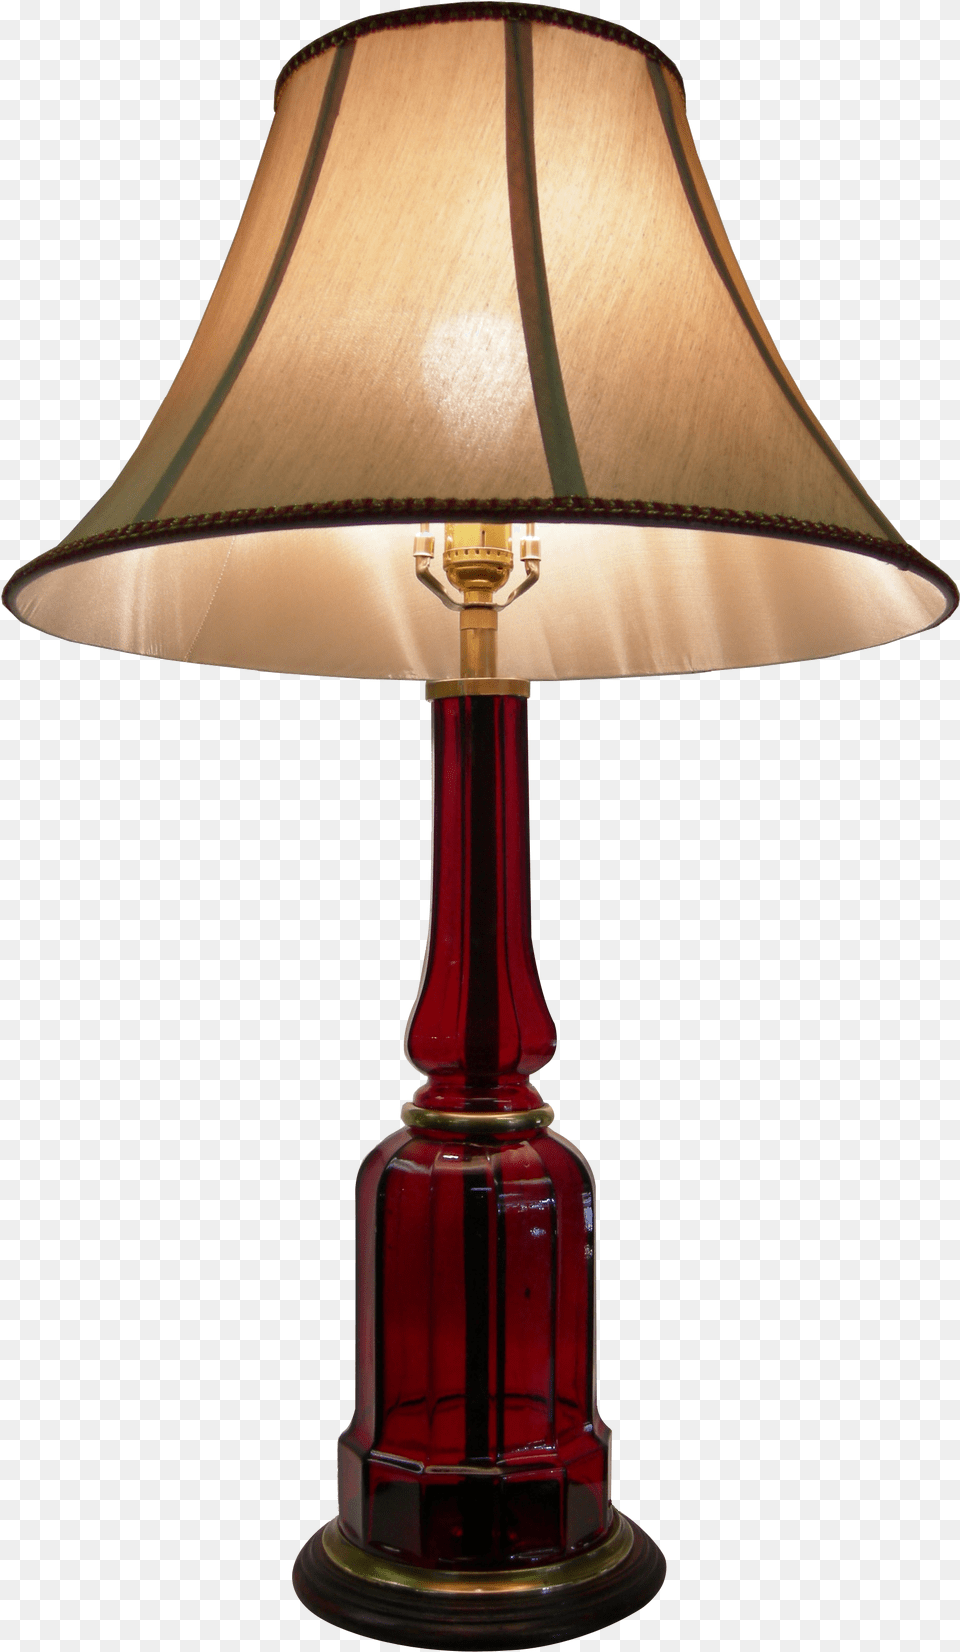 Download Lamp Image Clipart Lamp, Lampshade, Table Lamp Free Transparent Png